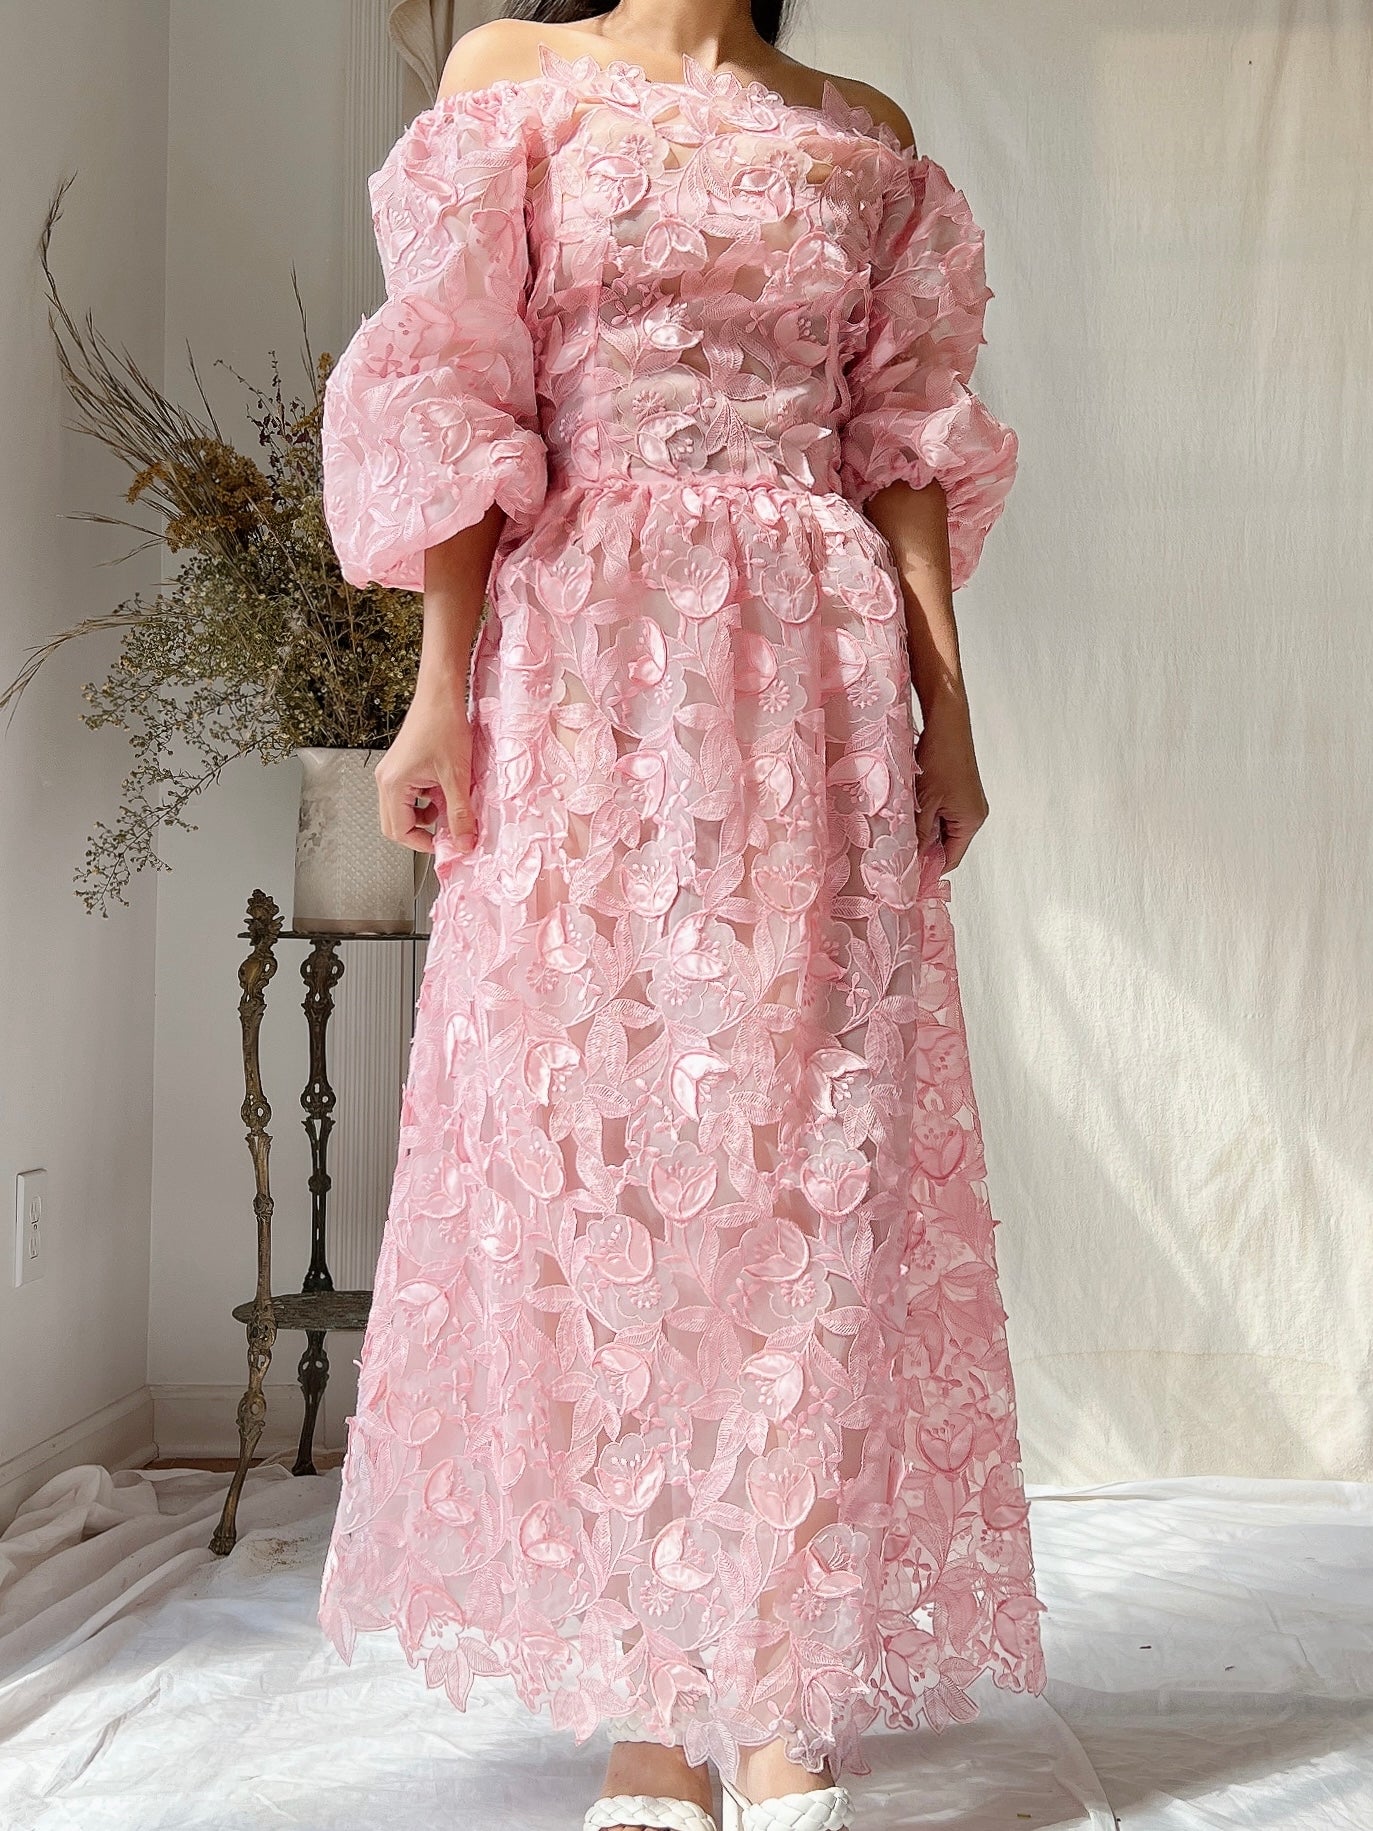 Vintage Pink Cutout Off-the-Shoulder Dress - M